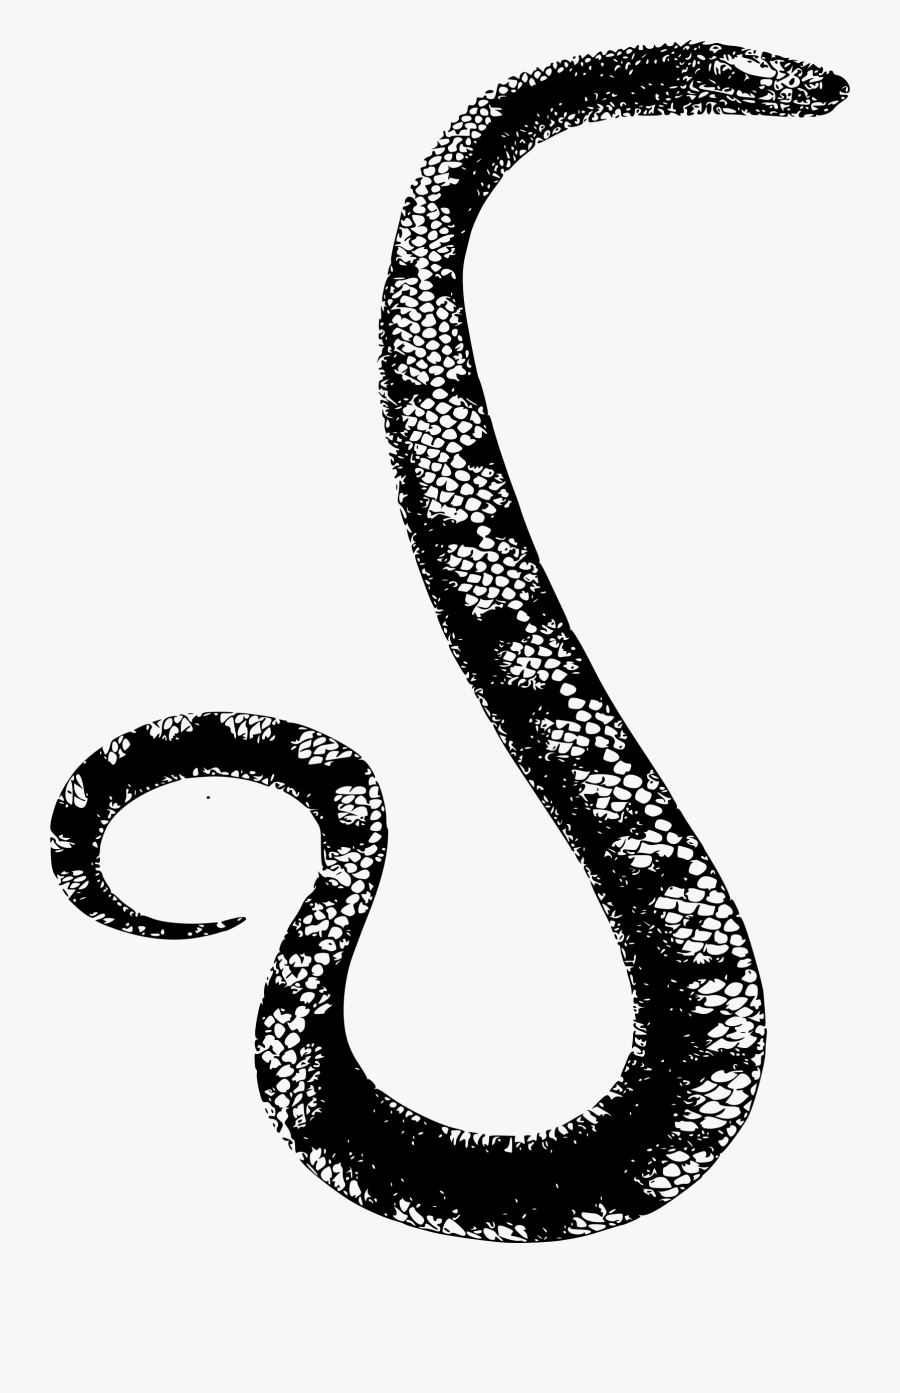 Reptile Clipart Big Snake - Snake Big Simple, Transparent Clipart